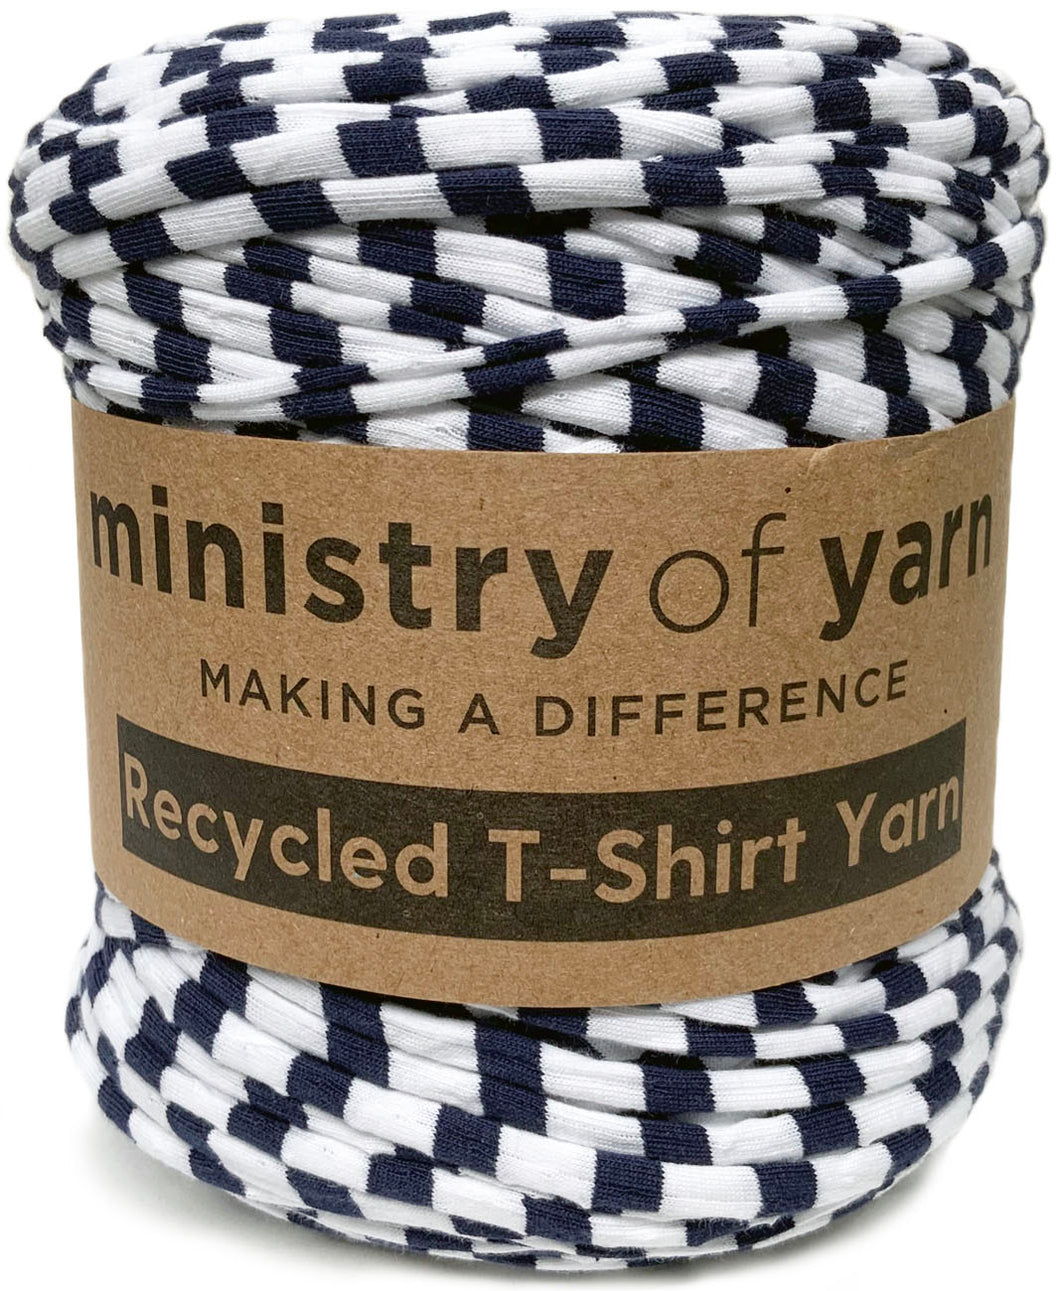 white and blue stripe recycled tshirt yarn Australia